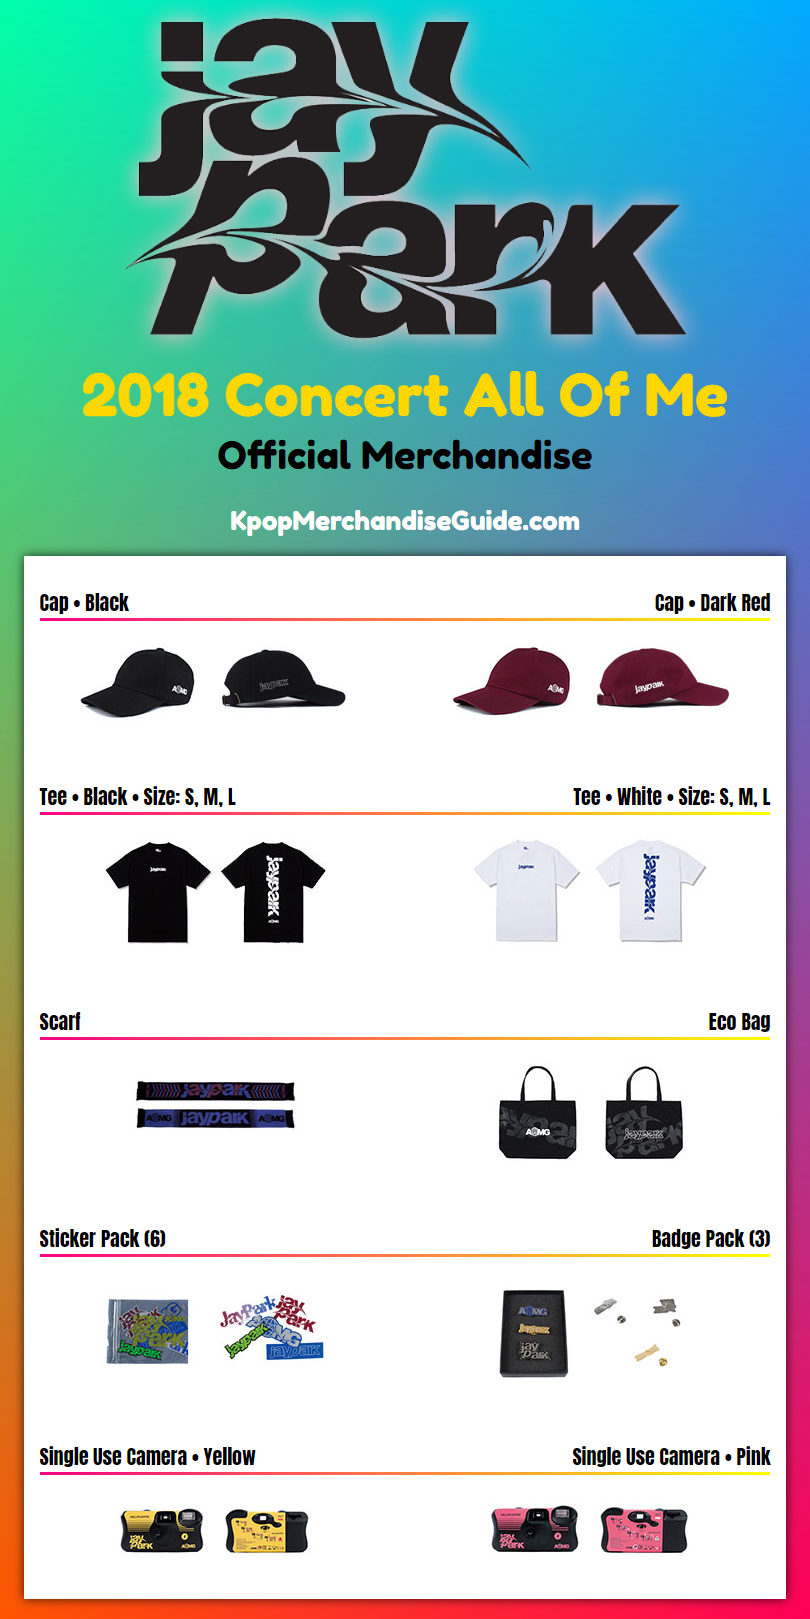 Jay Park 2018 Concert All Of Me Merchandise